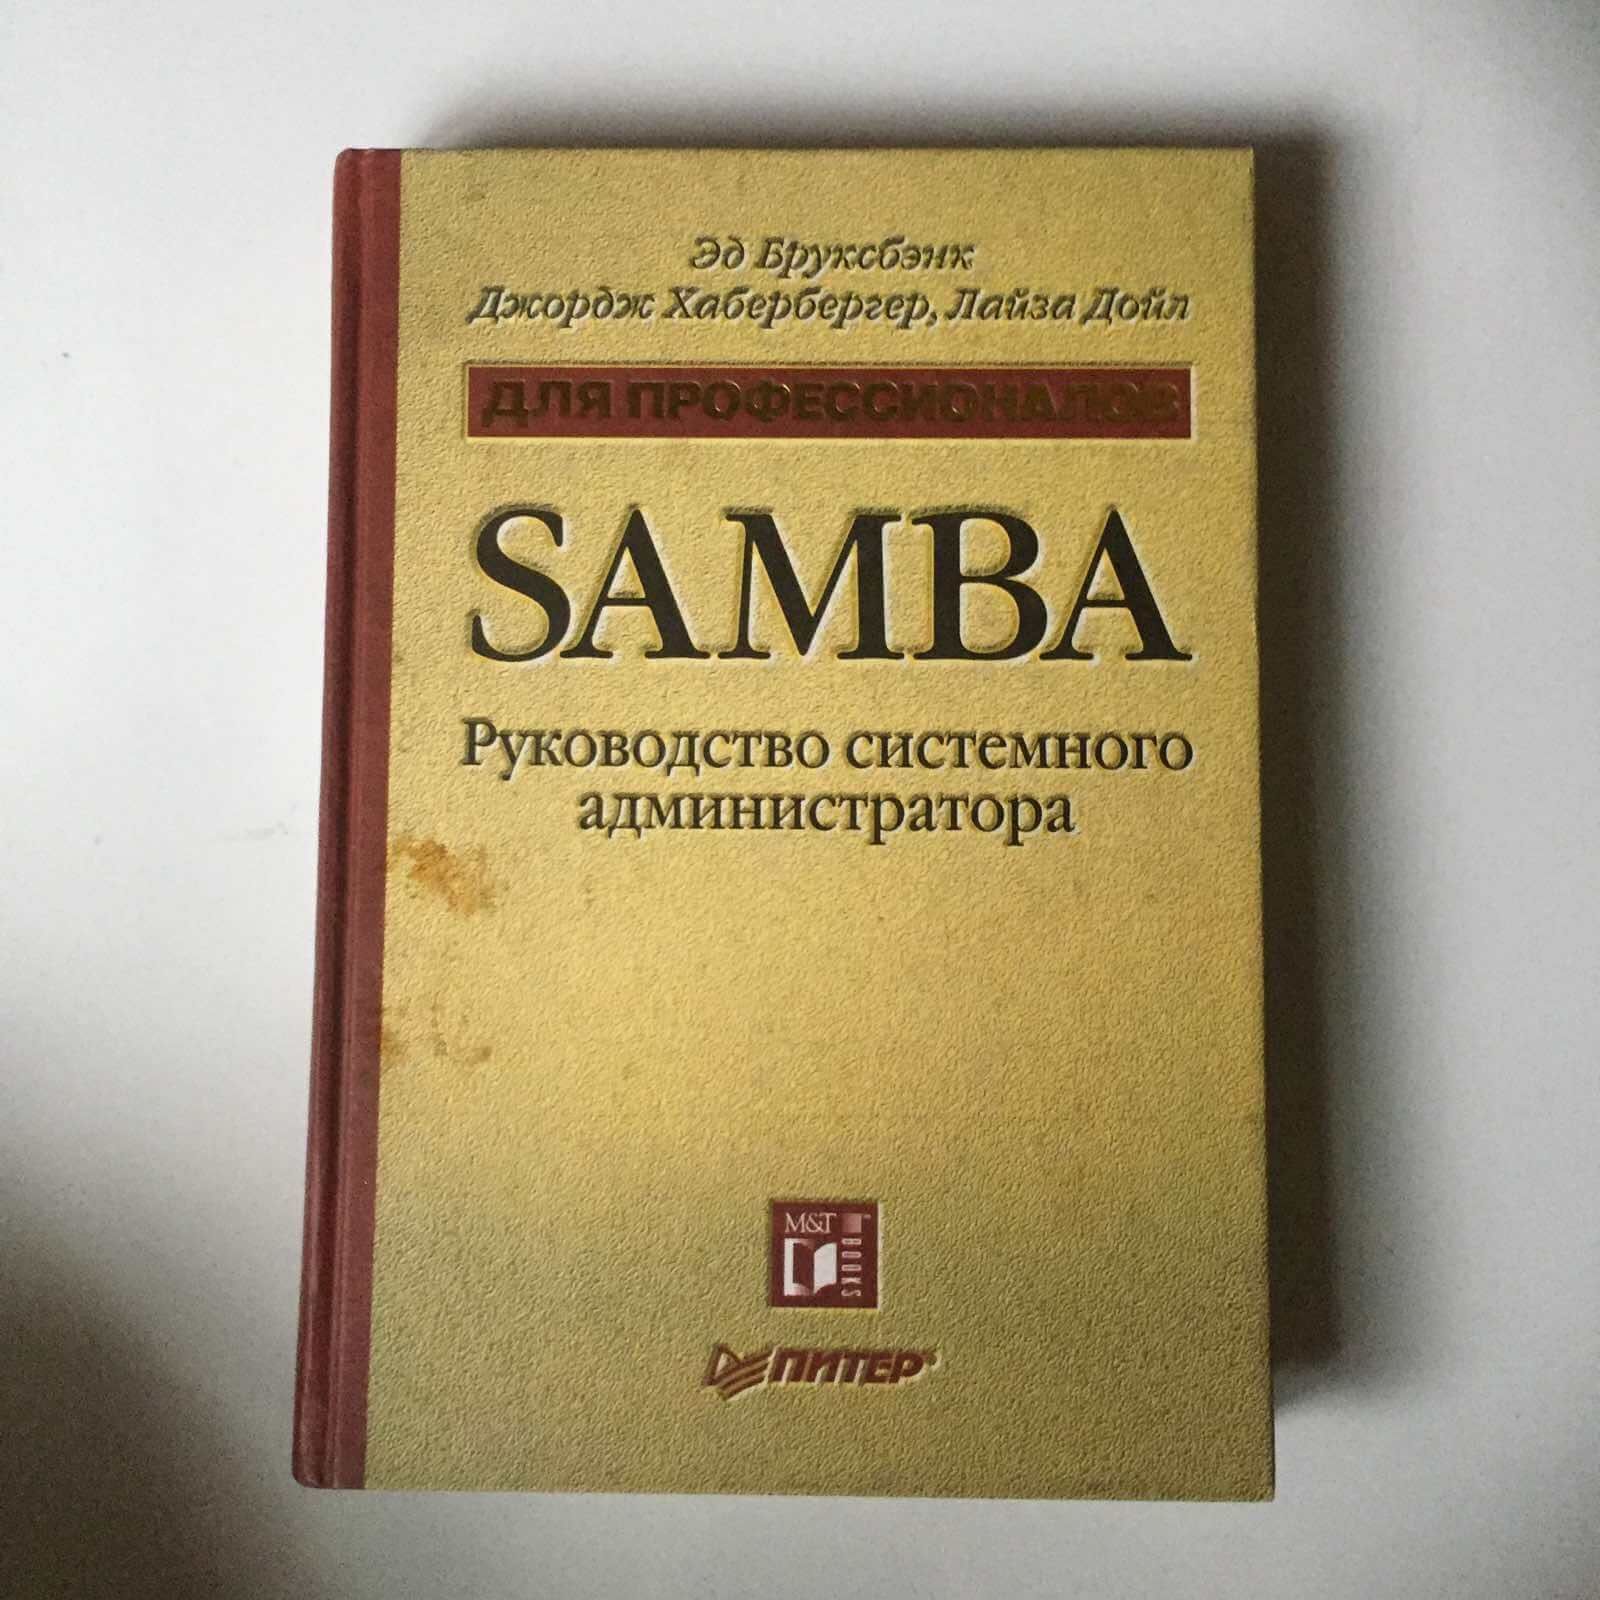 "SAMBA. Руководство системного администратора", б/у